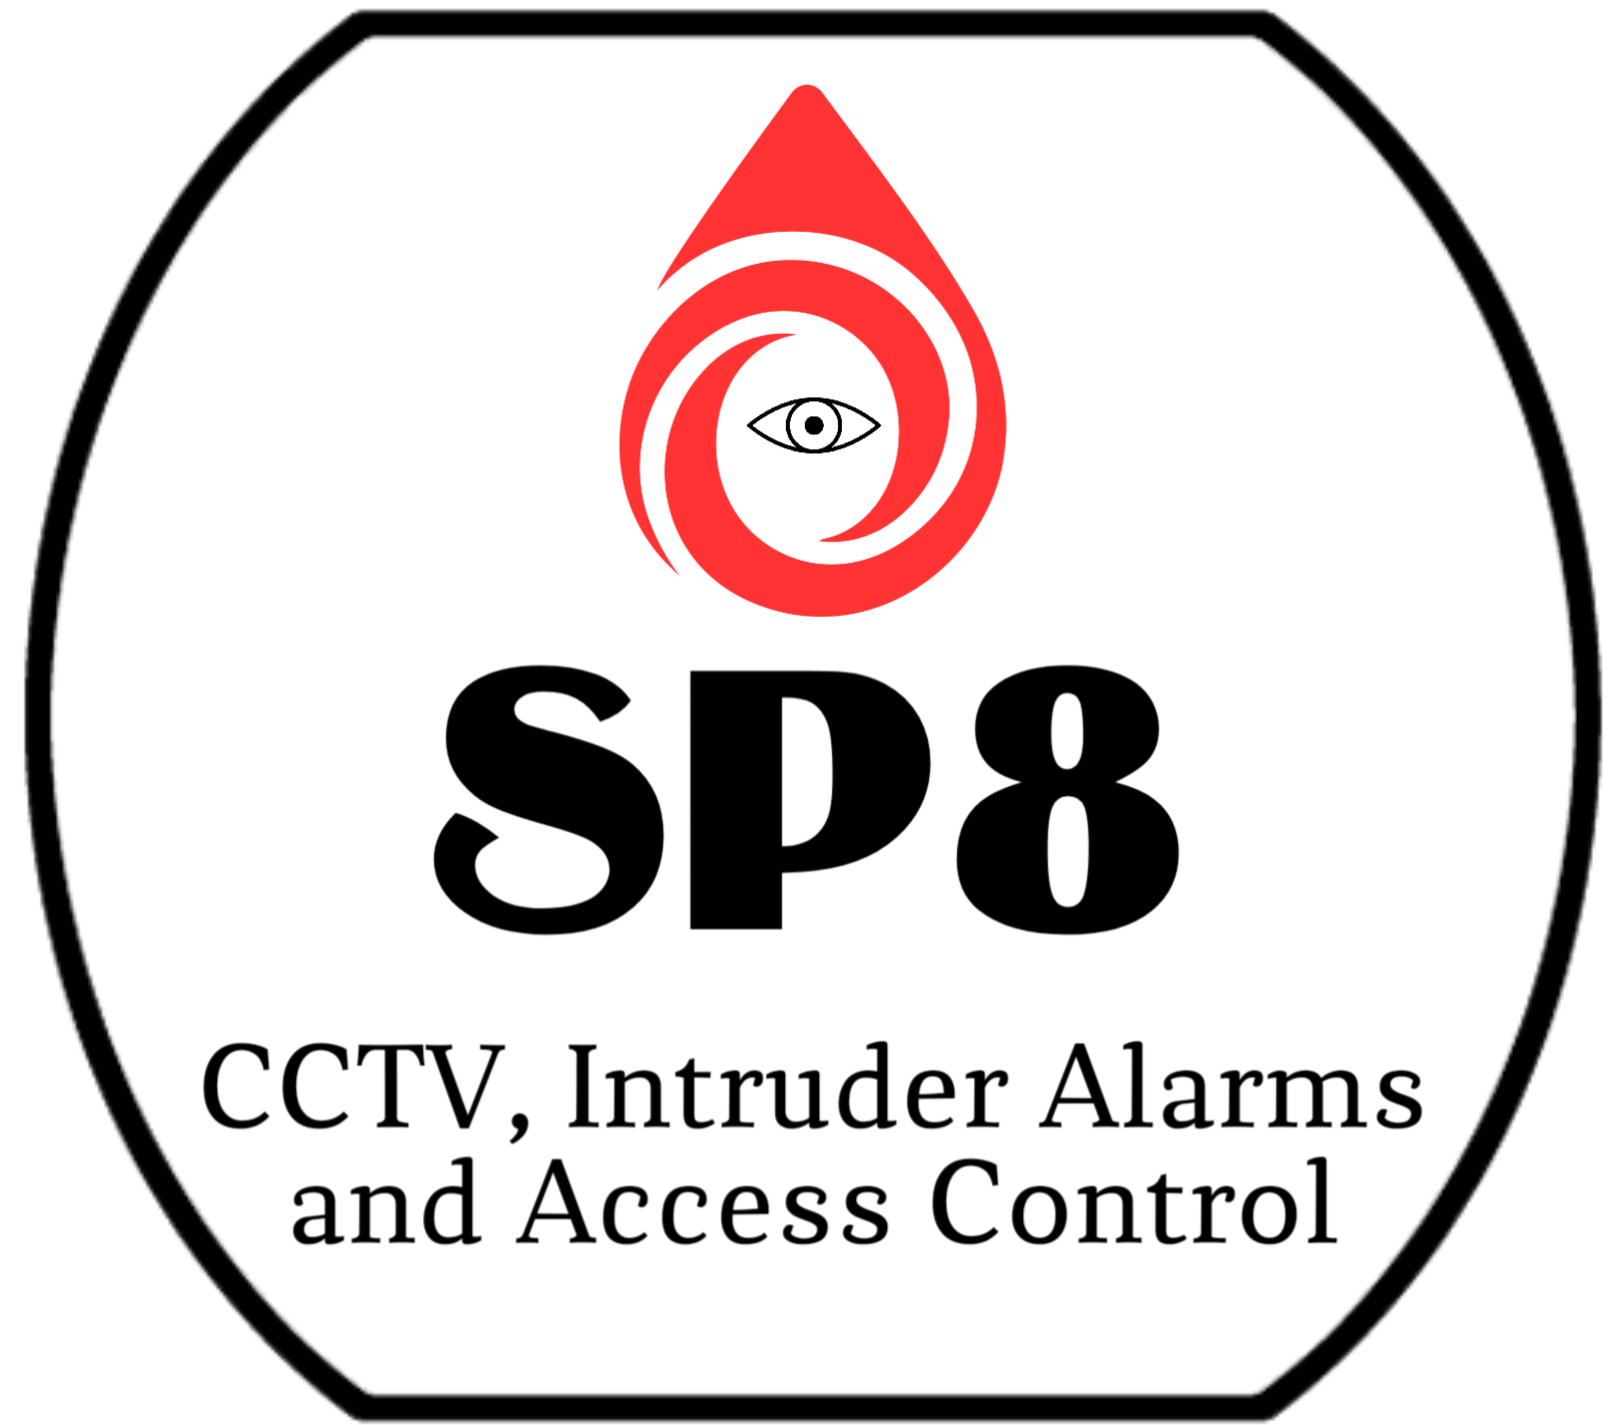 SP8 CCTV